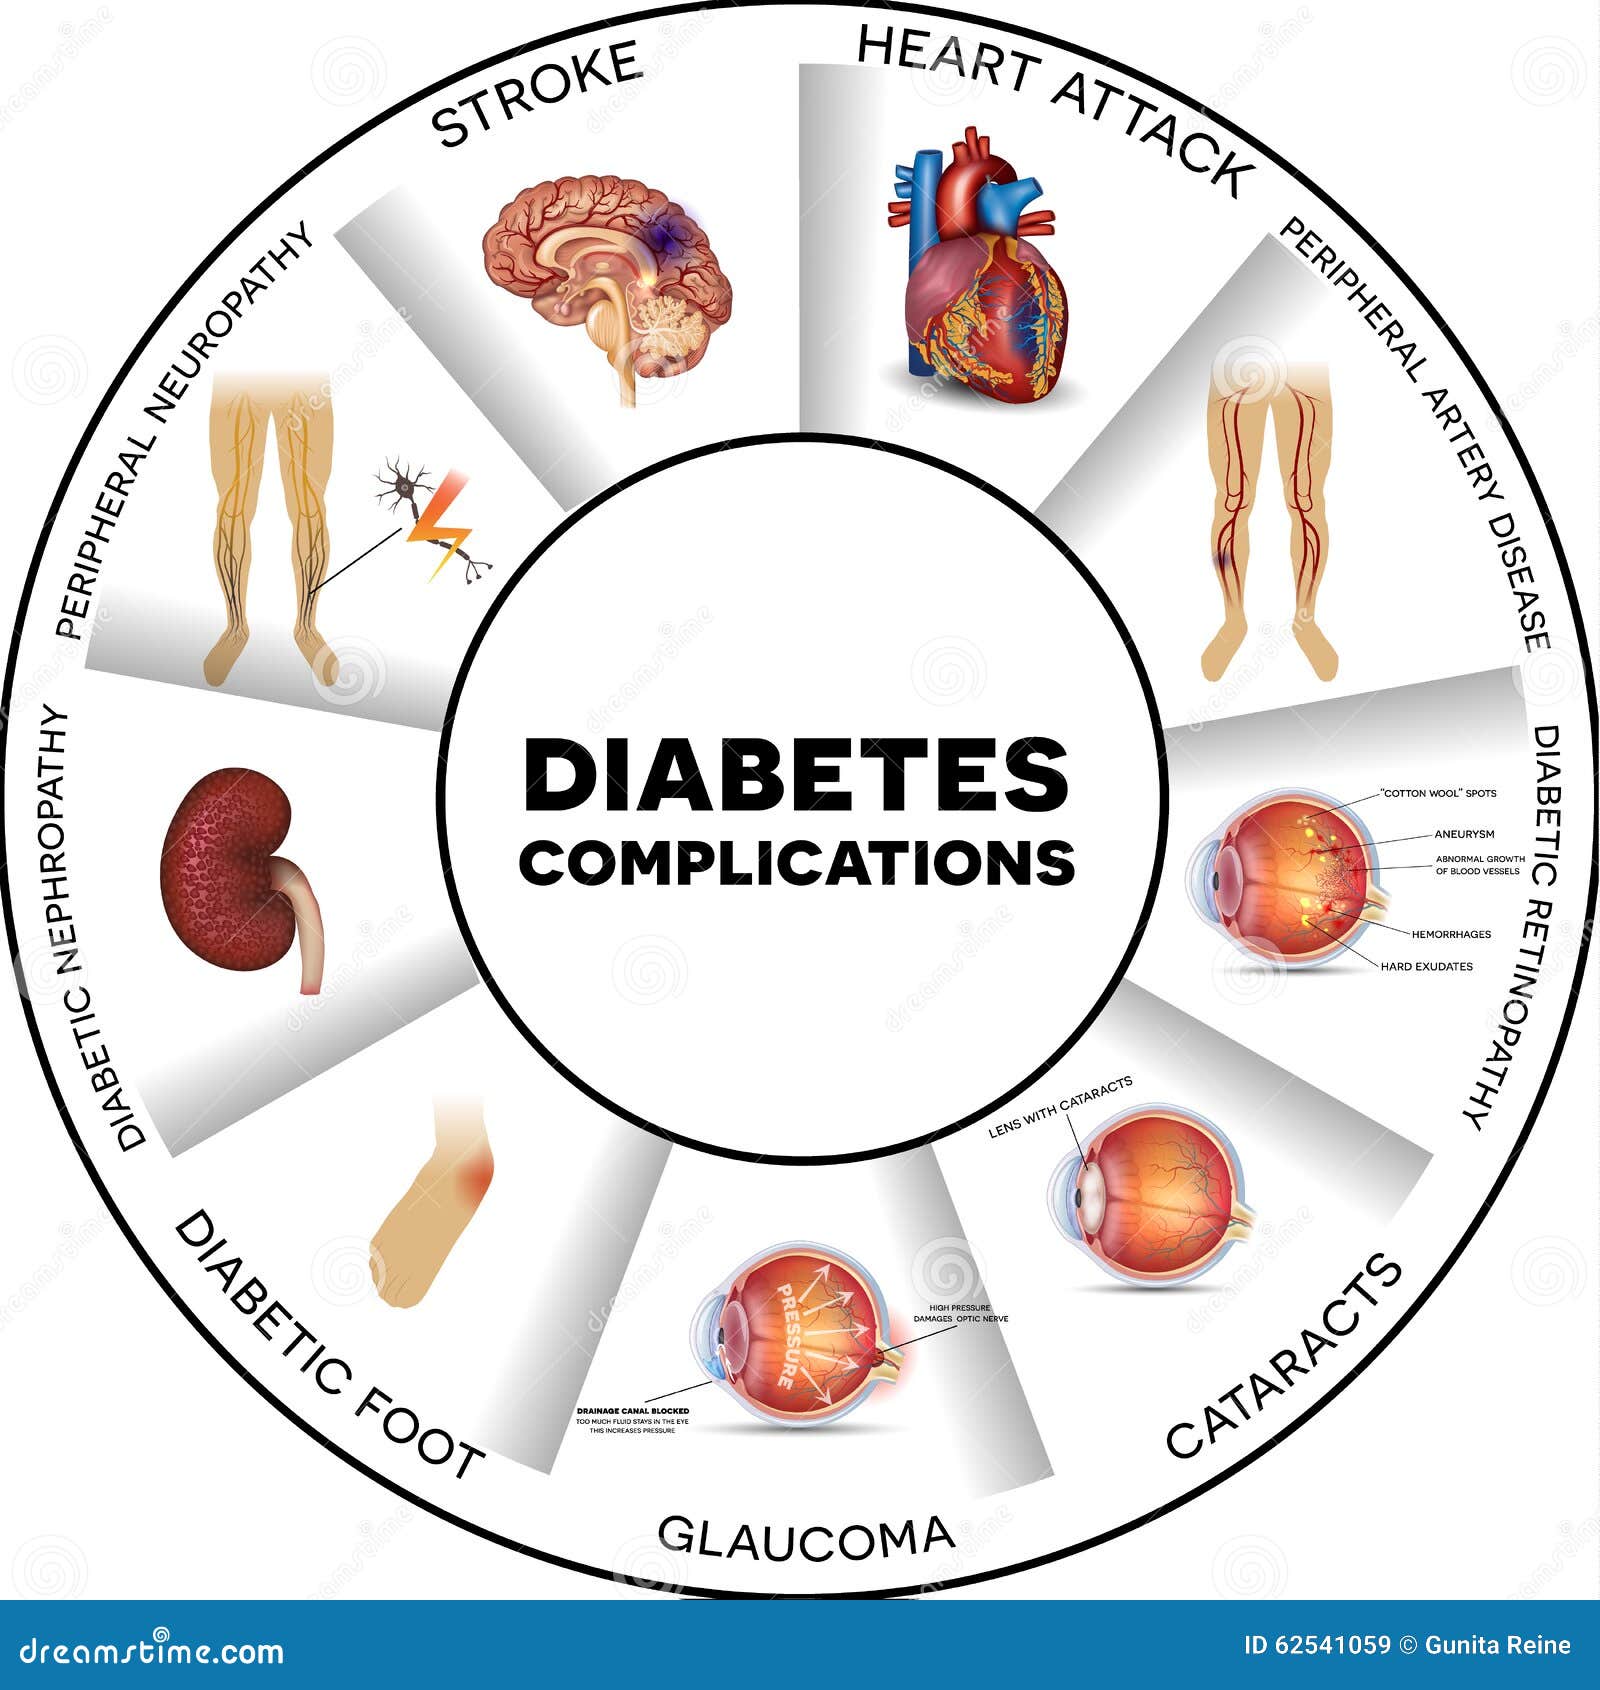 Diabetes complications stock illustration. Illustration of anatomy